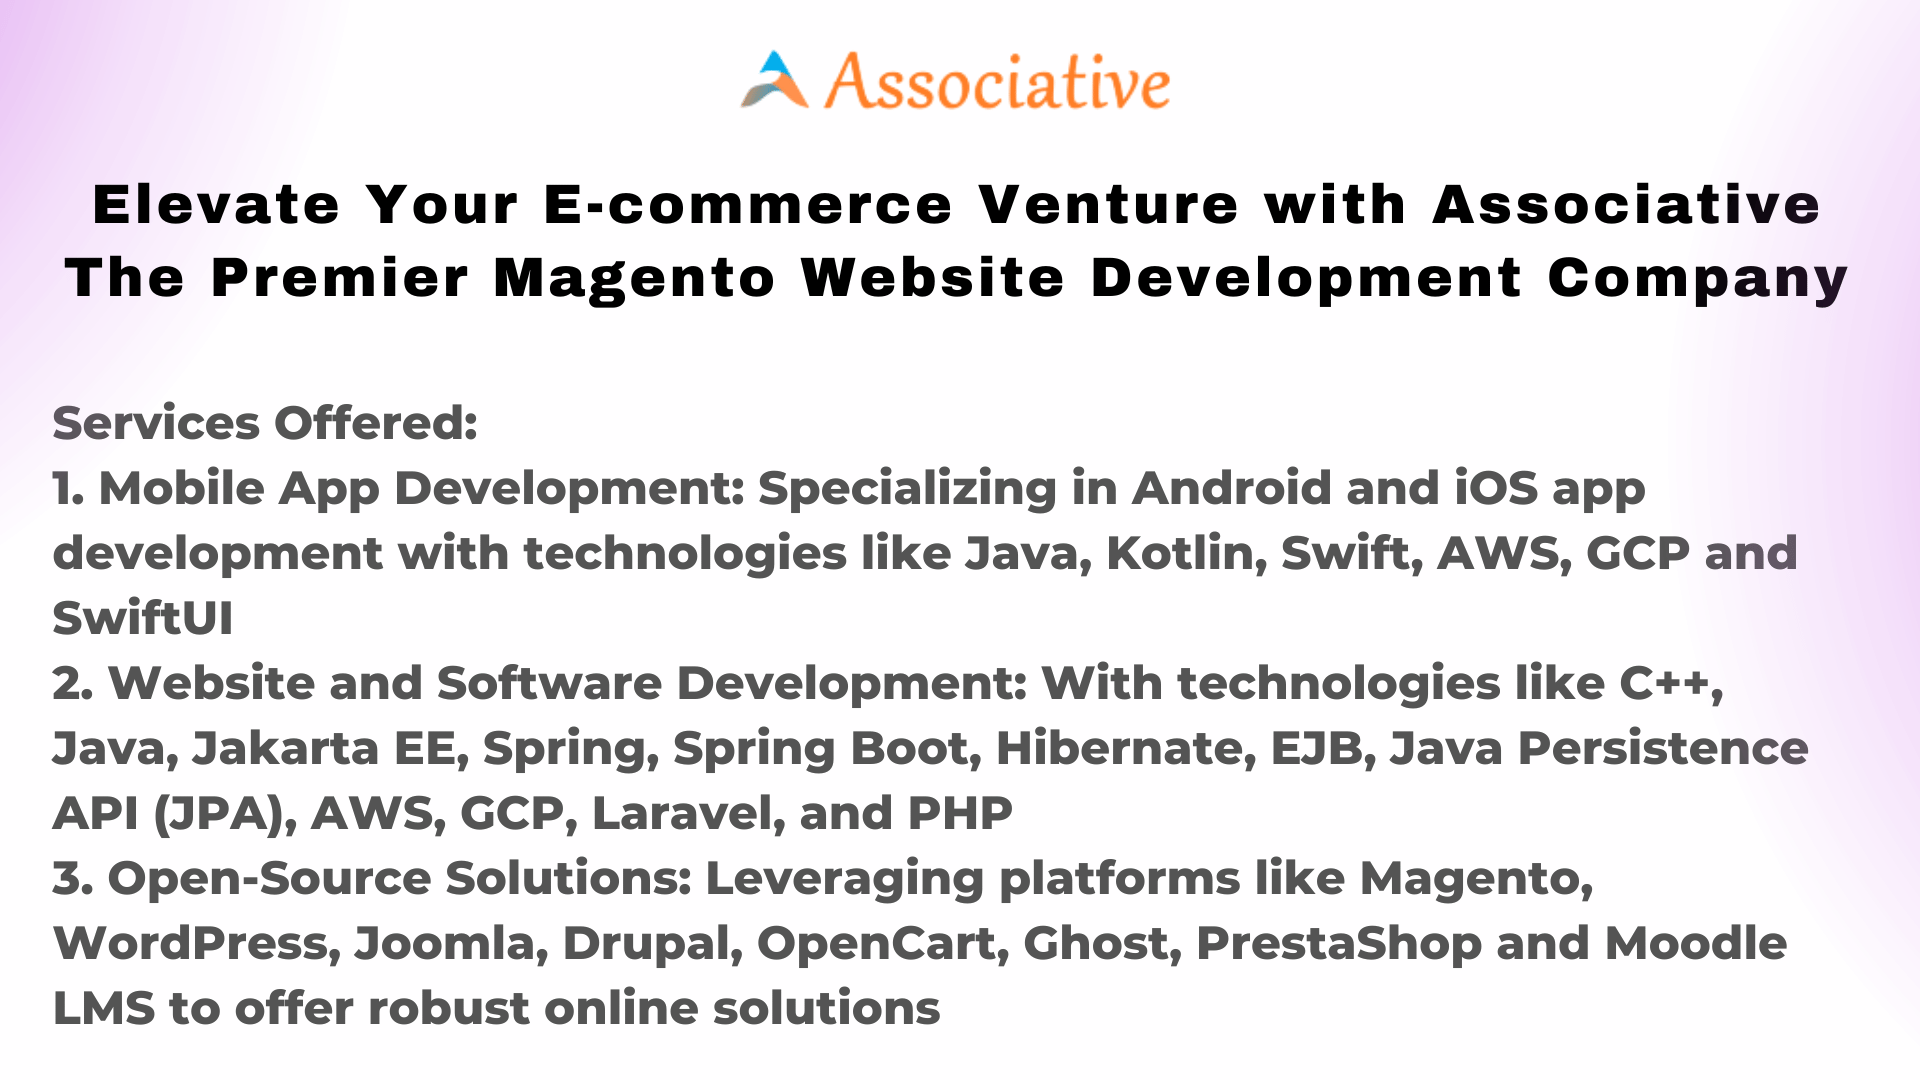 Elevate Your E-commerce Venture with Associative The Premier Magento Website Development Company